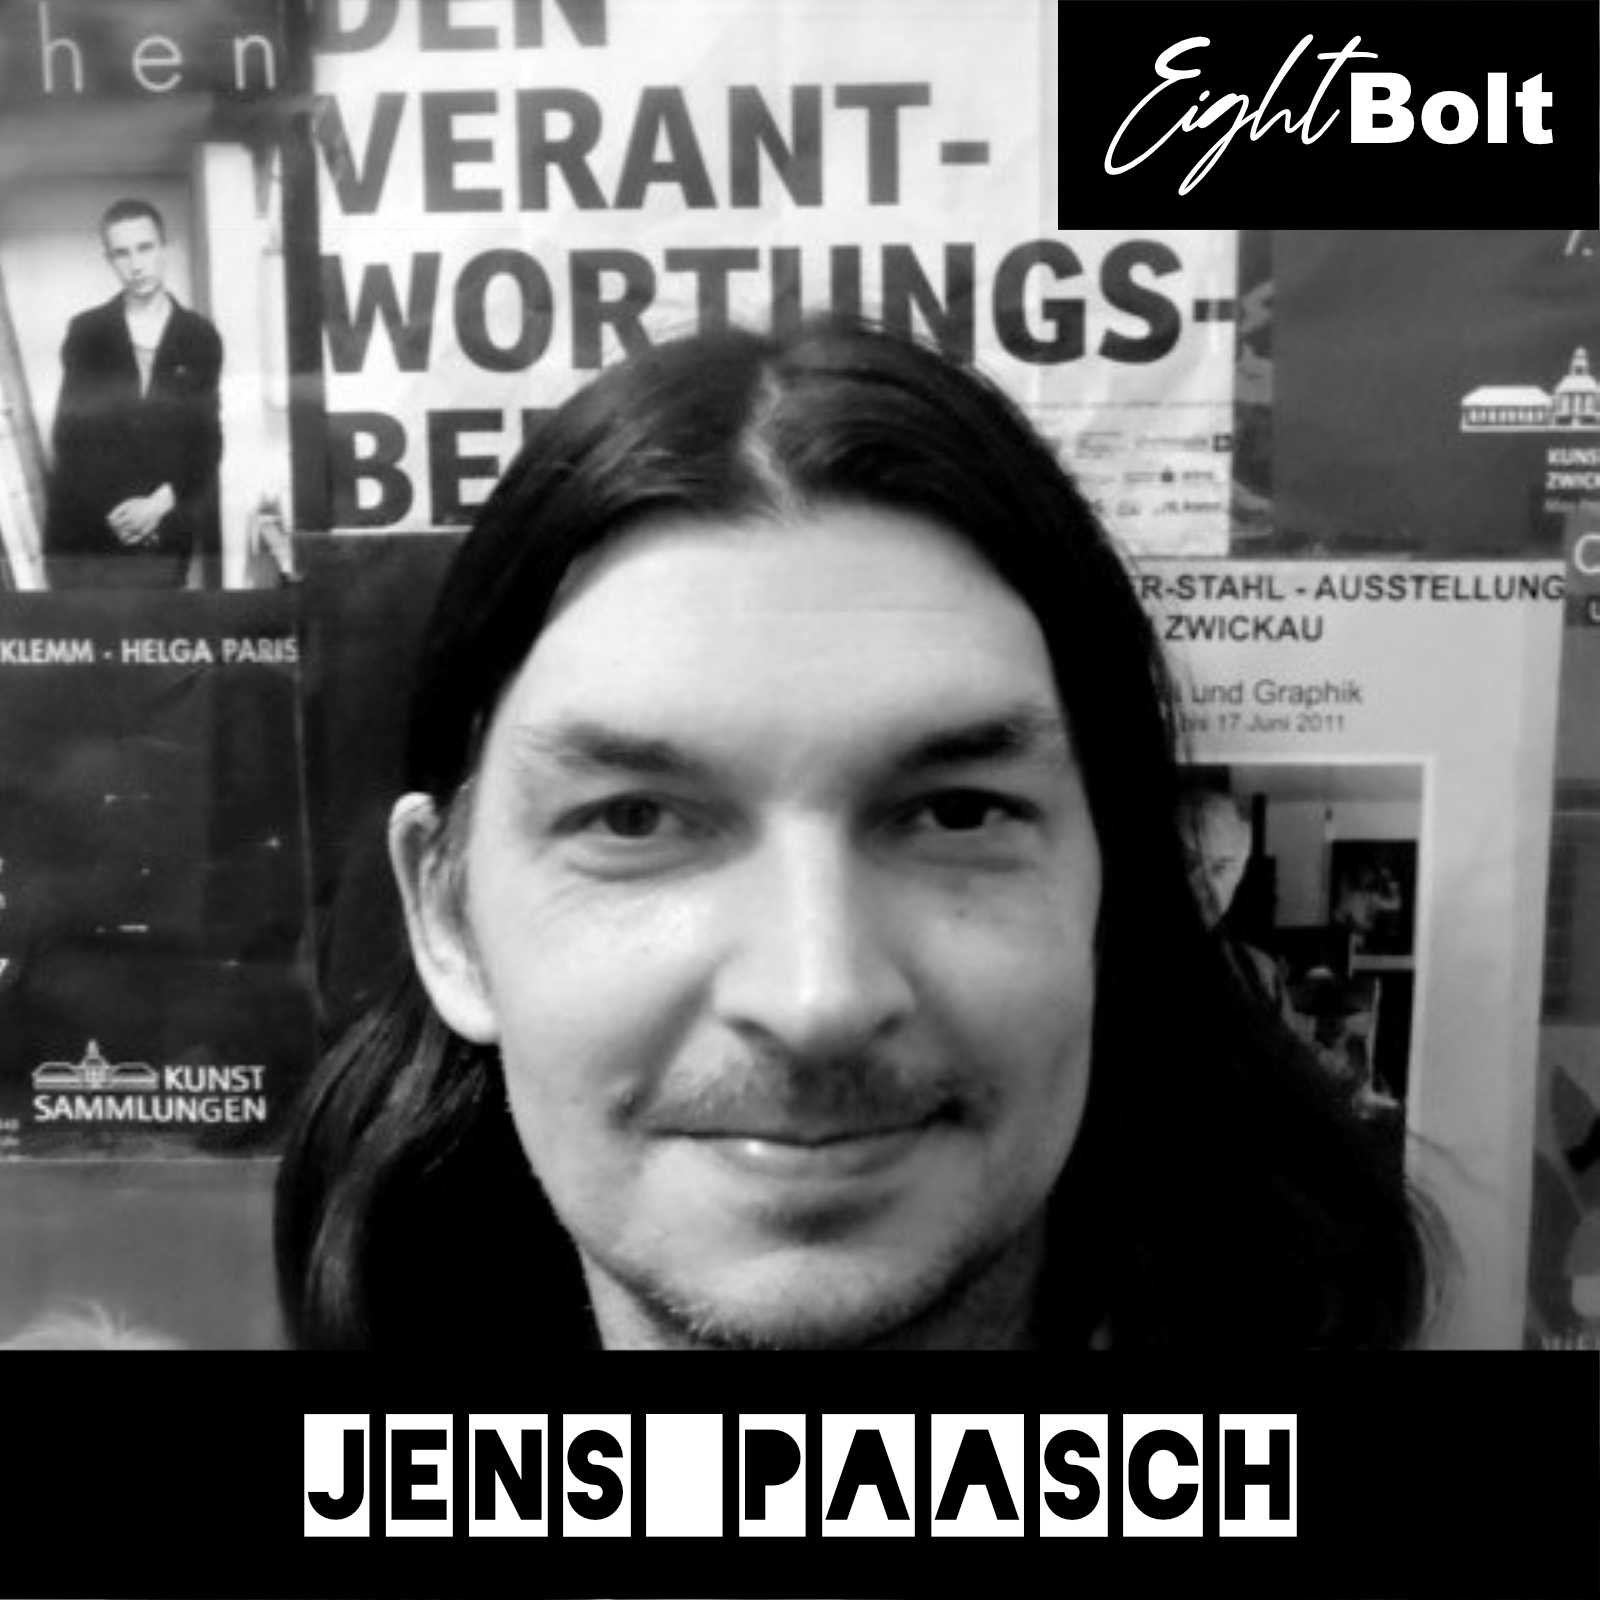 Eightbolt Guest Podcast Part #032 with #JensPaasch